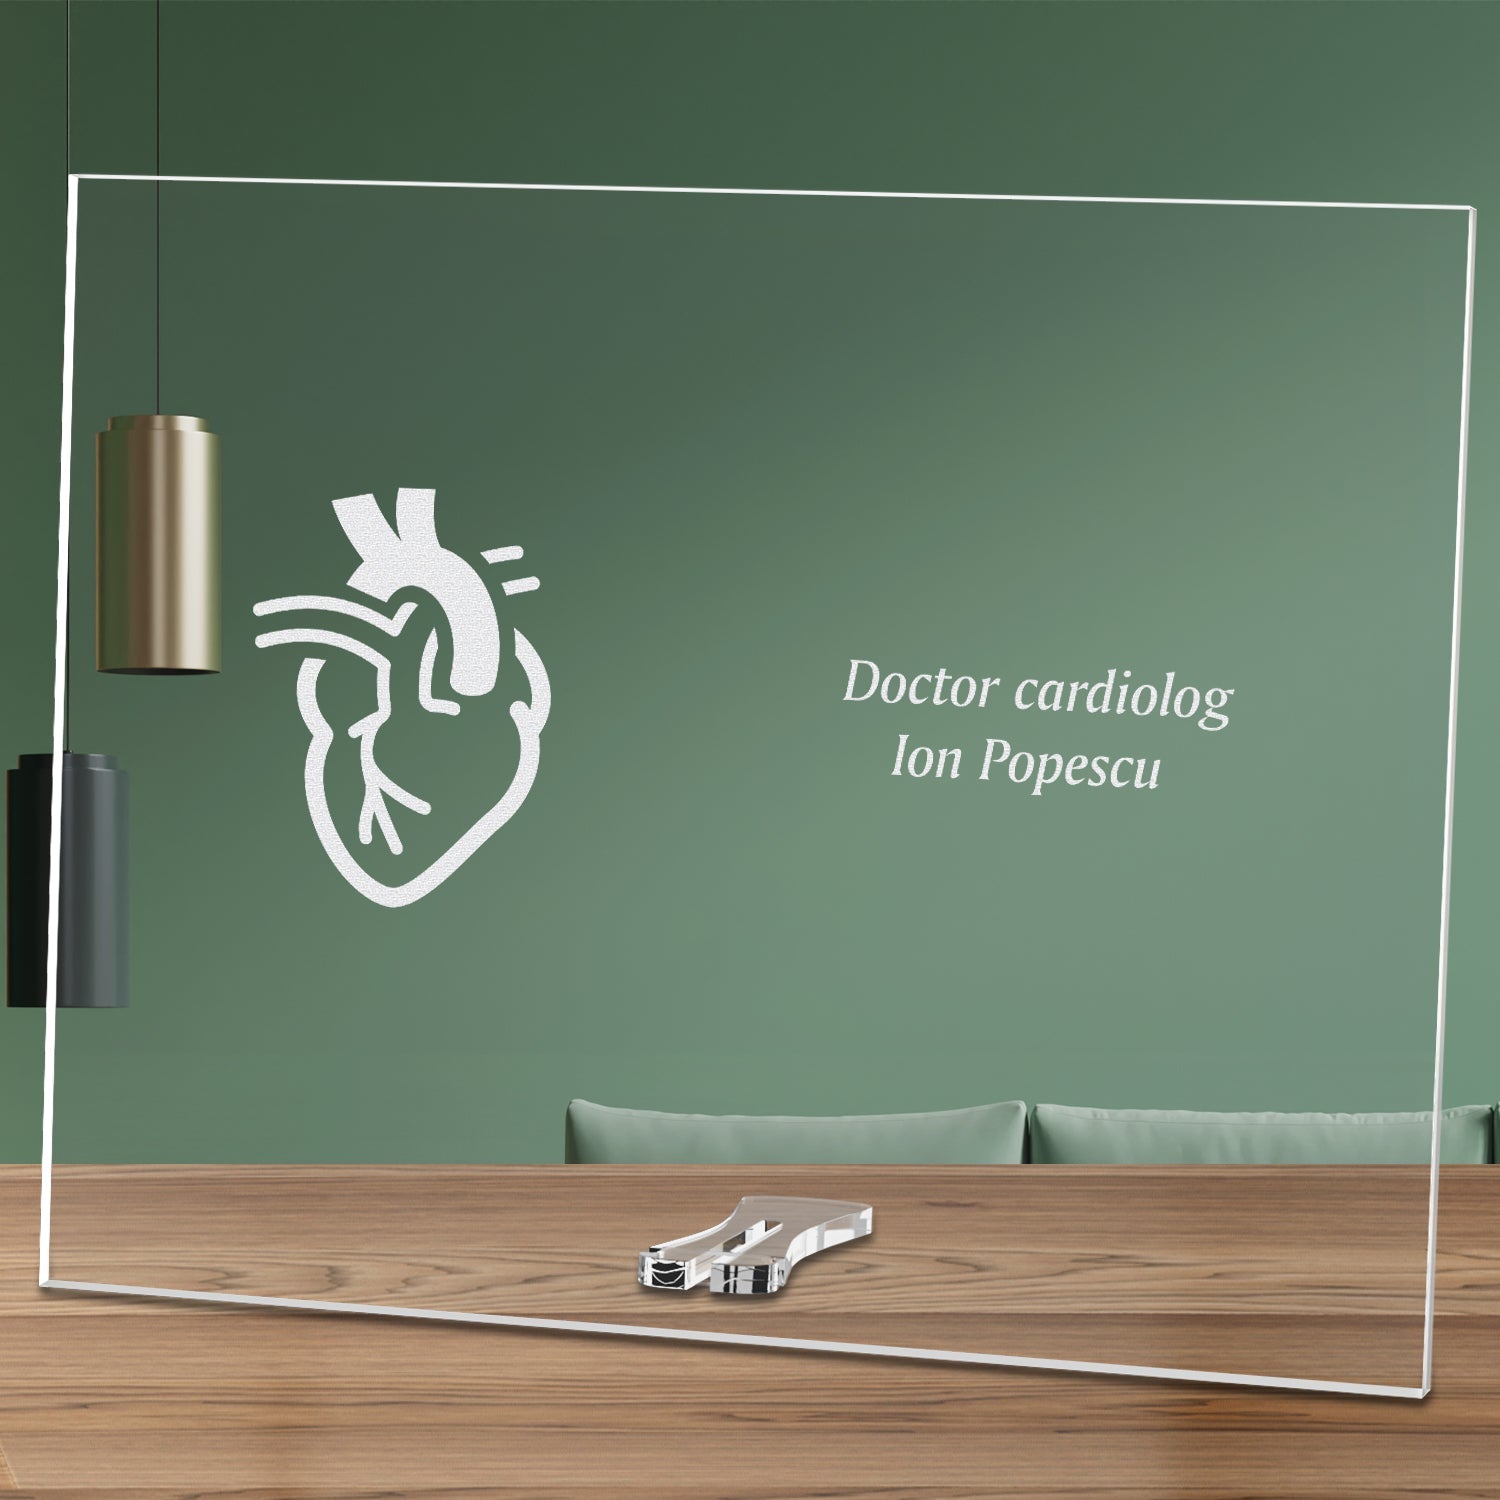 Cadou personalizat placheta din plexiglas - Doctor cardiolog - ghizbi.ro